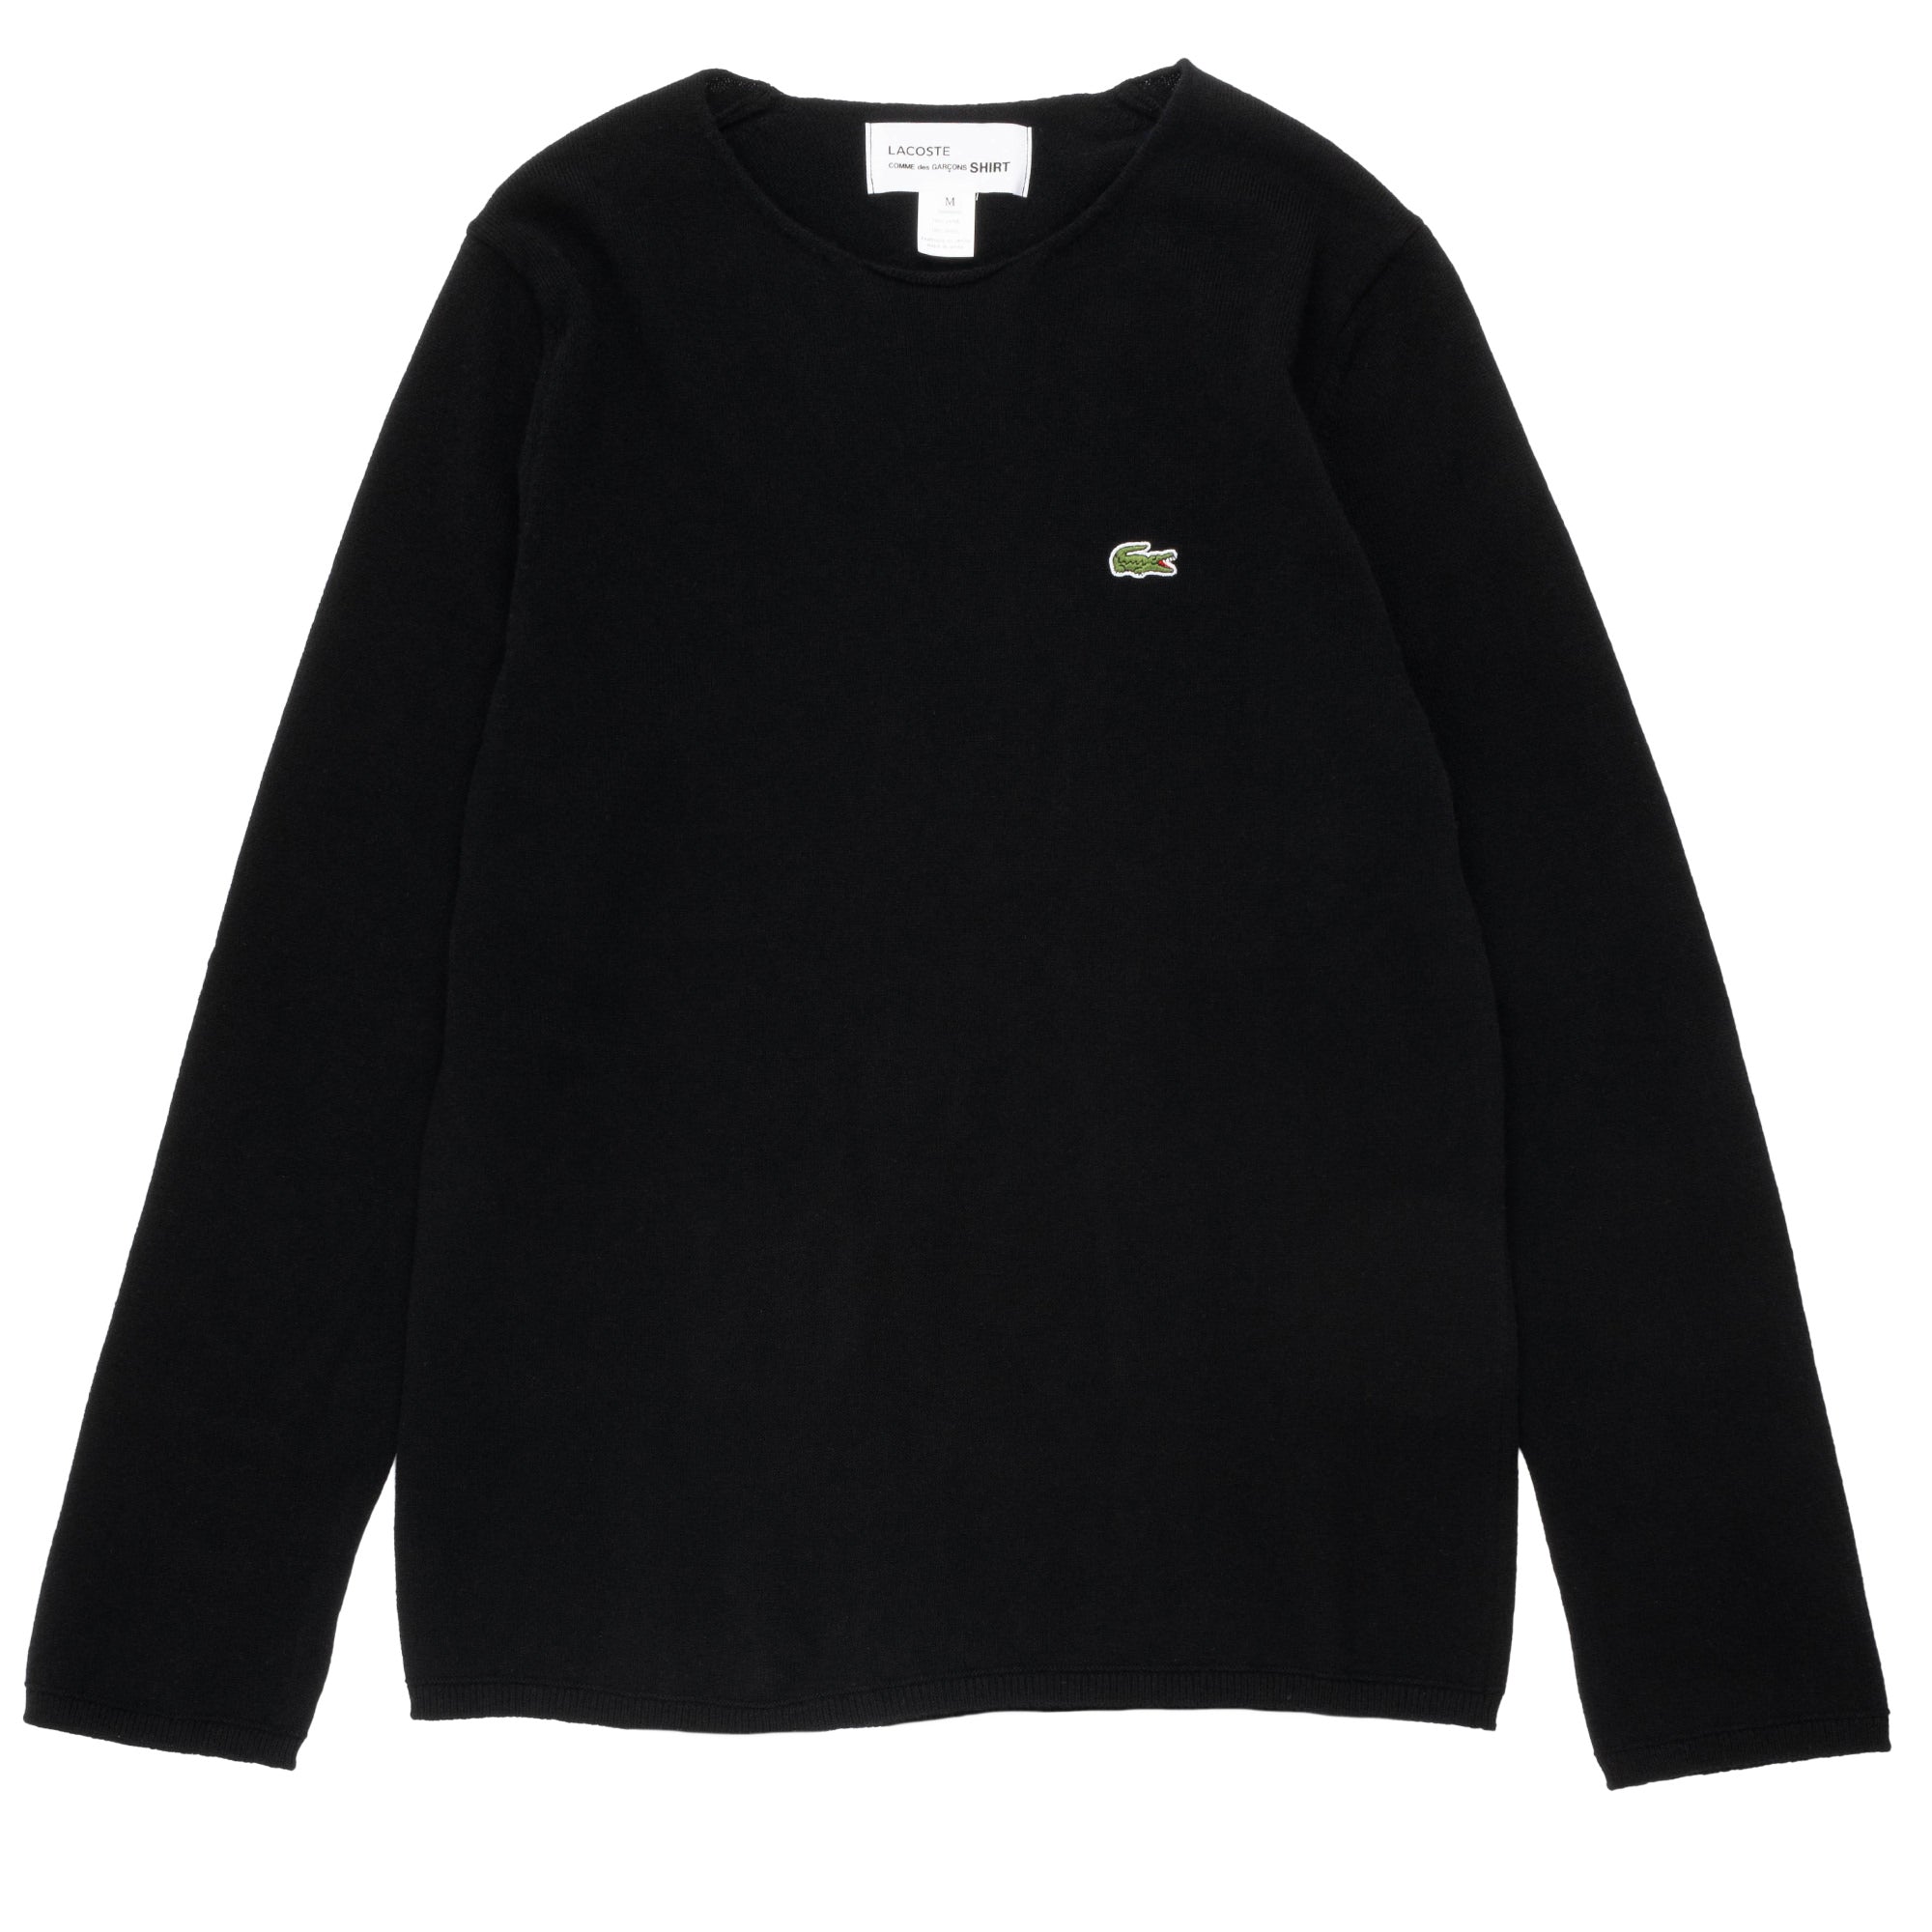 CDG SHIRT lacoste Elite Wool Sweater FL-N004-W23 Black